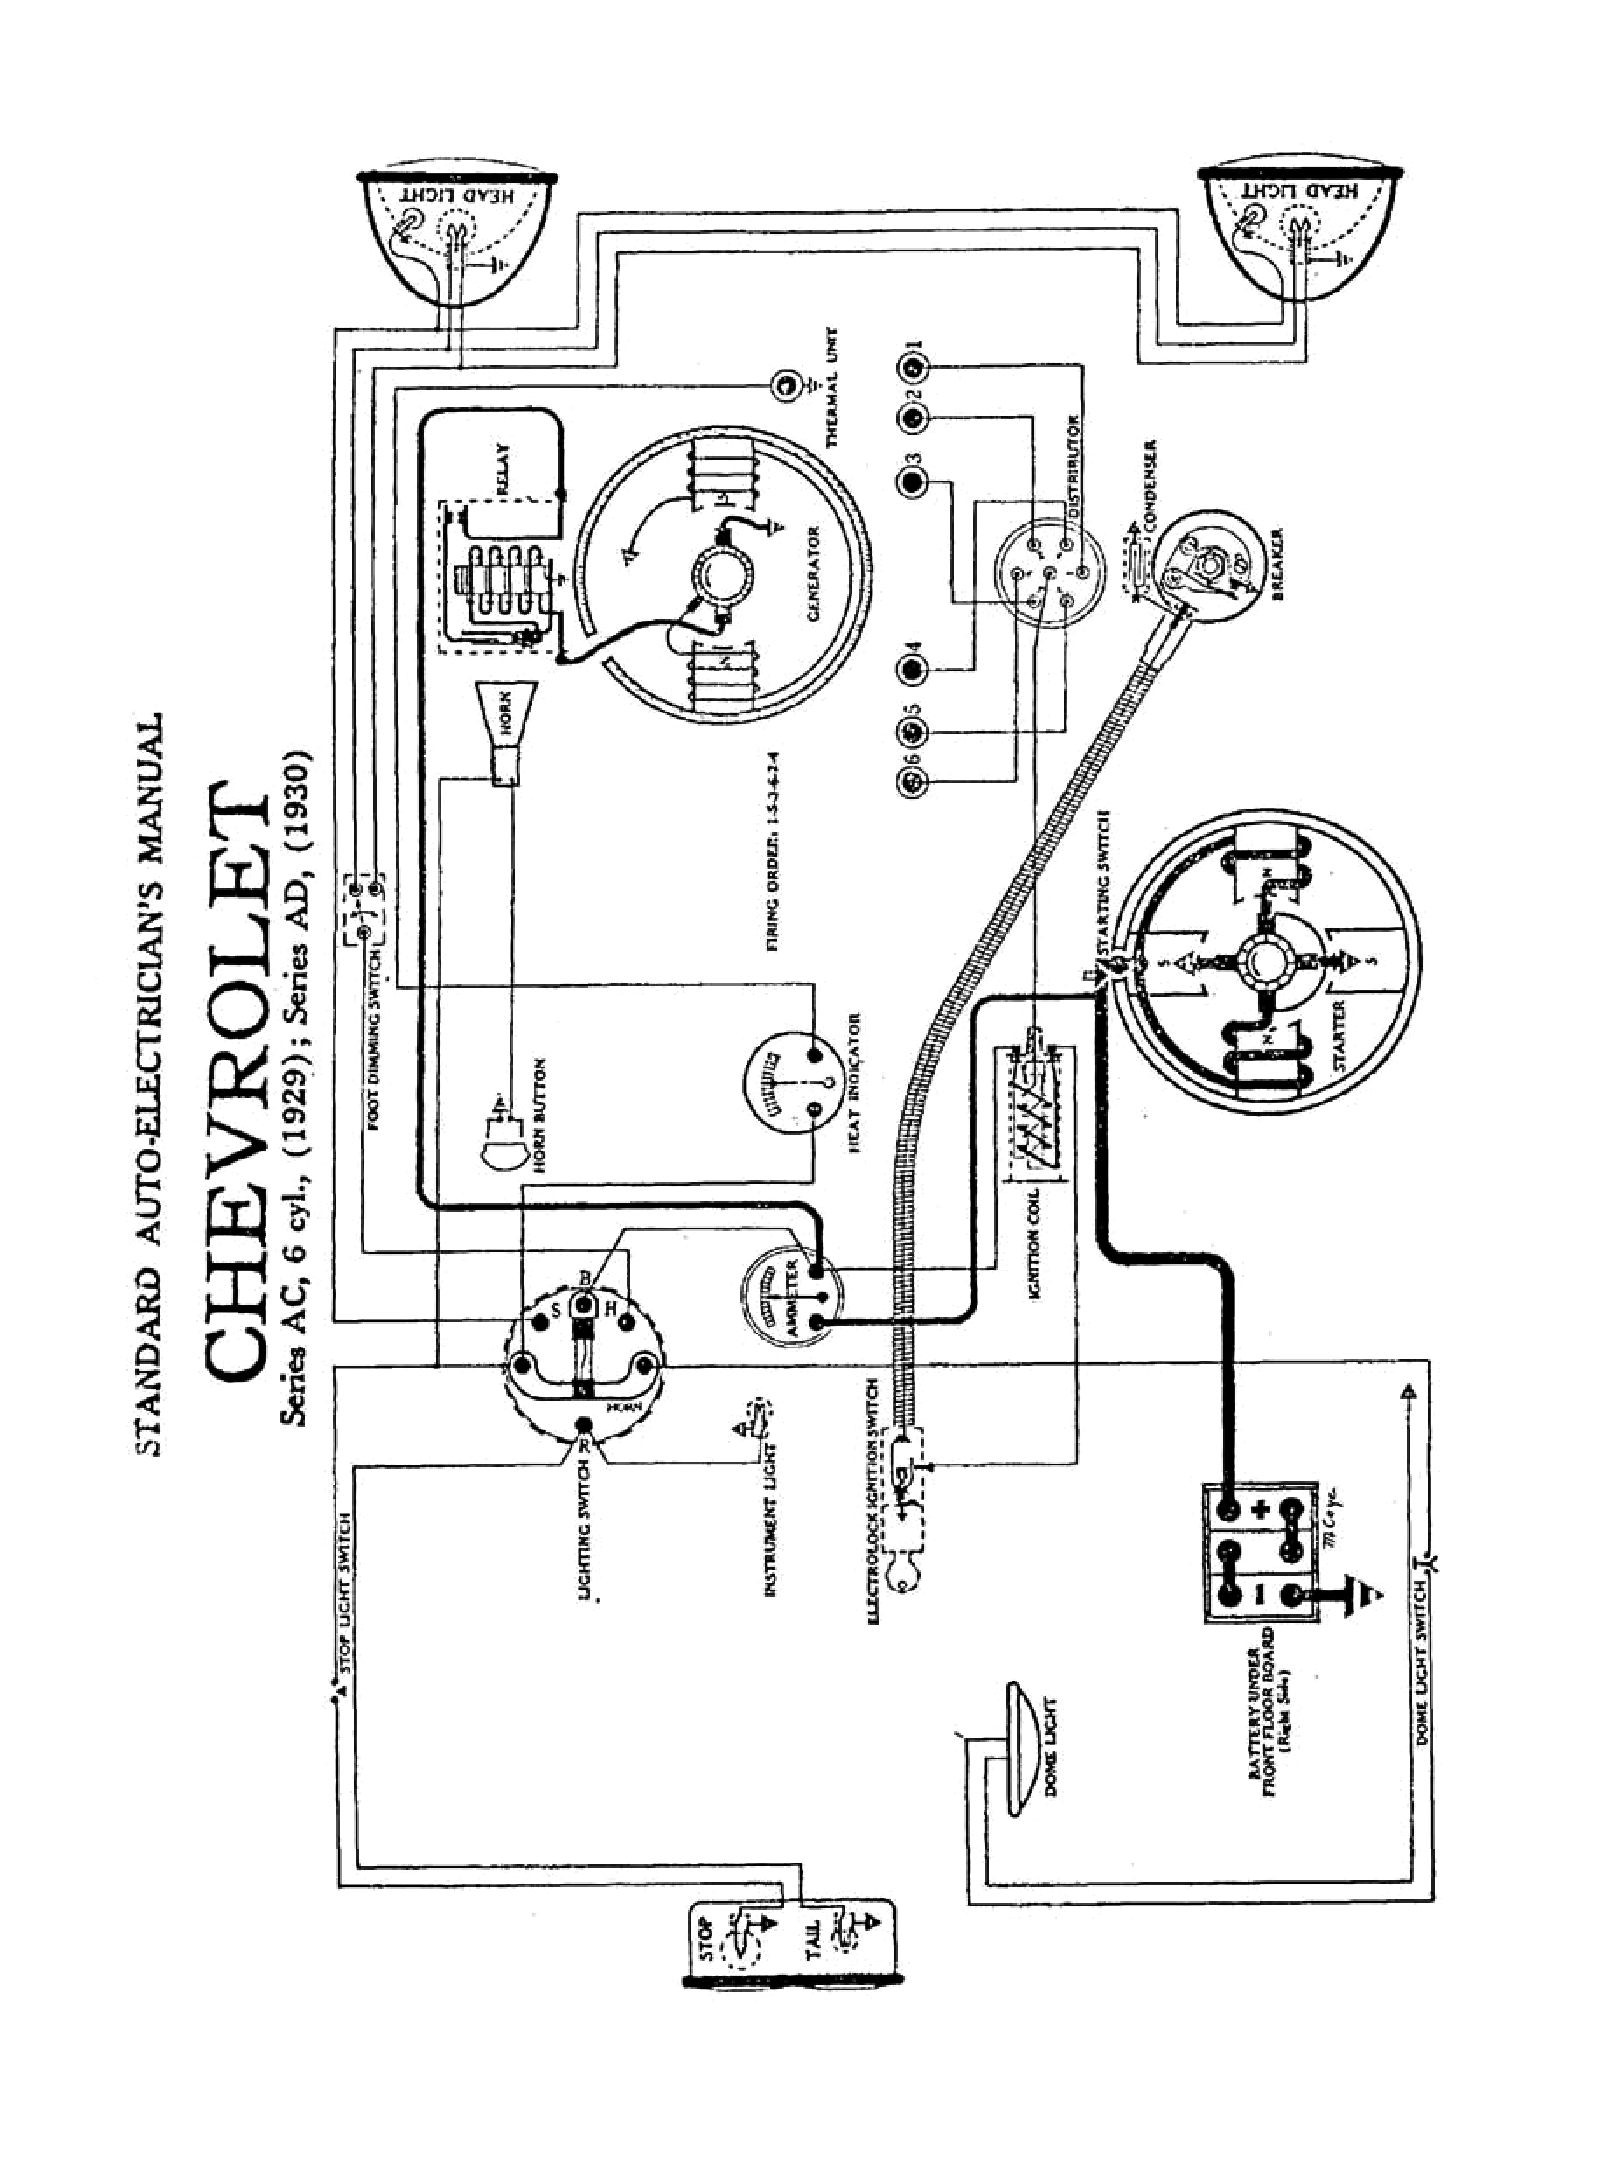 350 Engine Firing order Diagram Chevy Wiring Diagrams Of 350 Engine Firing order Diagram